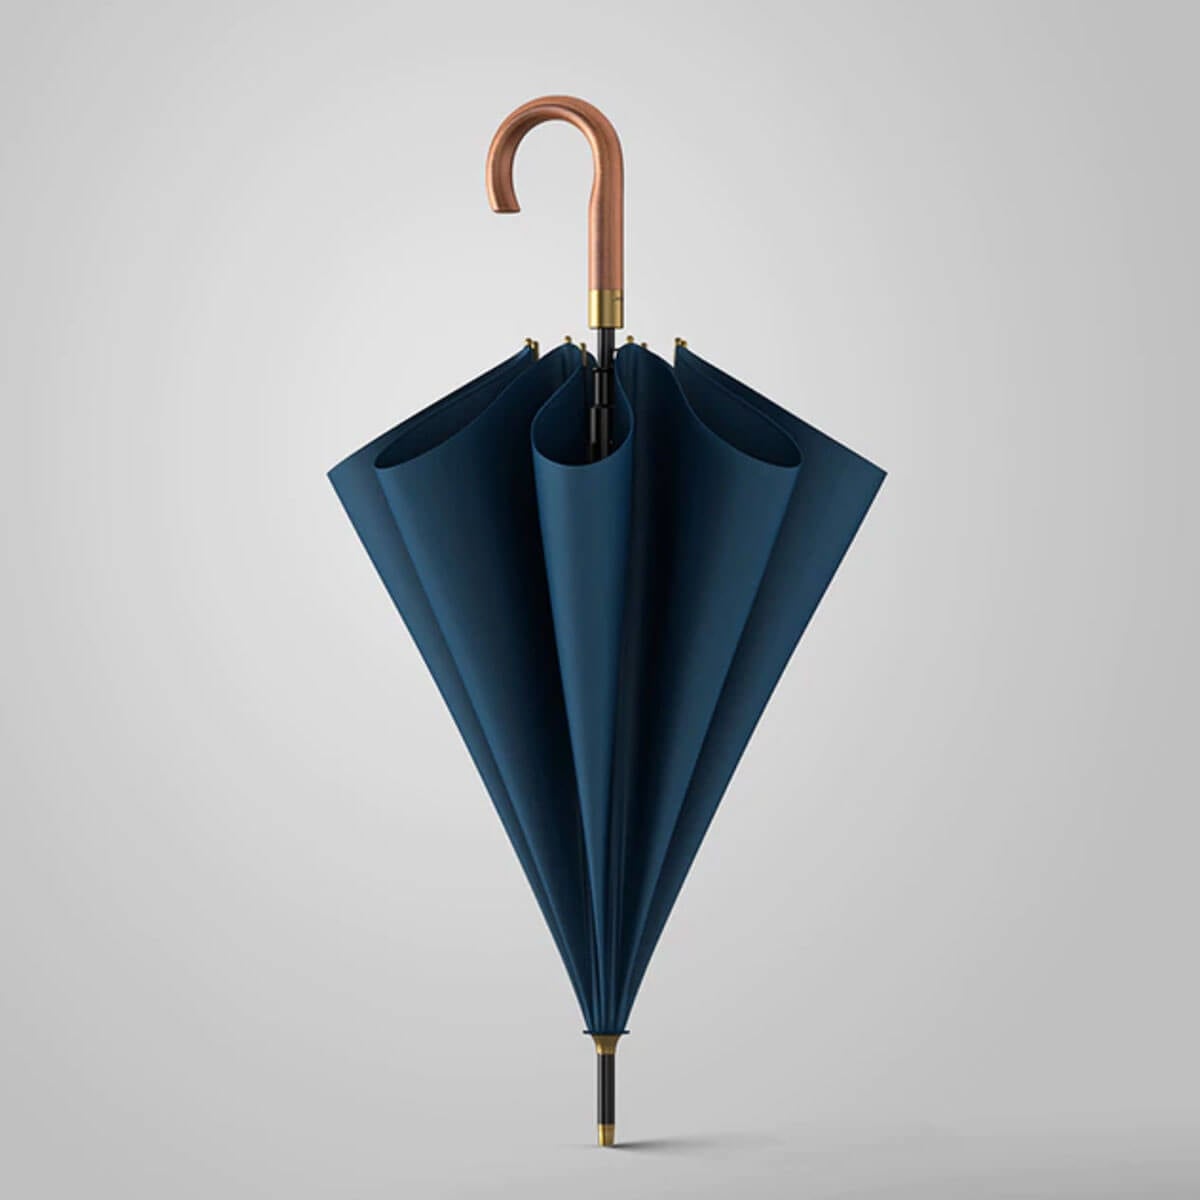 Vintage Wooden Long Business Umbrella